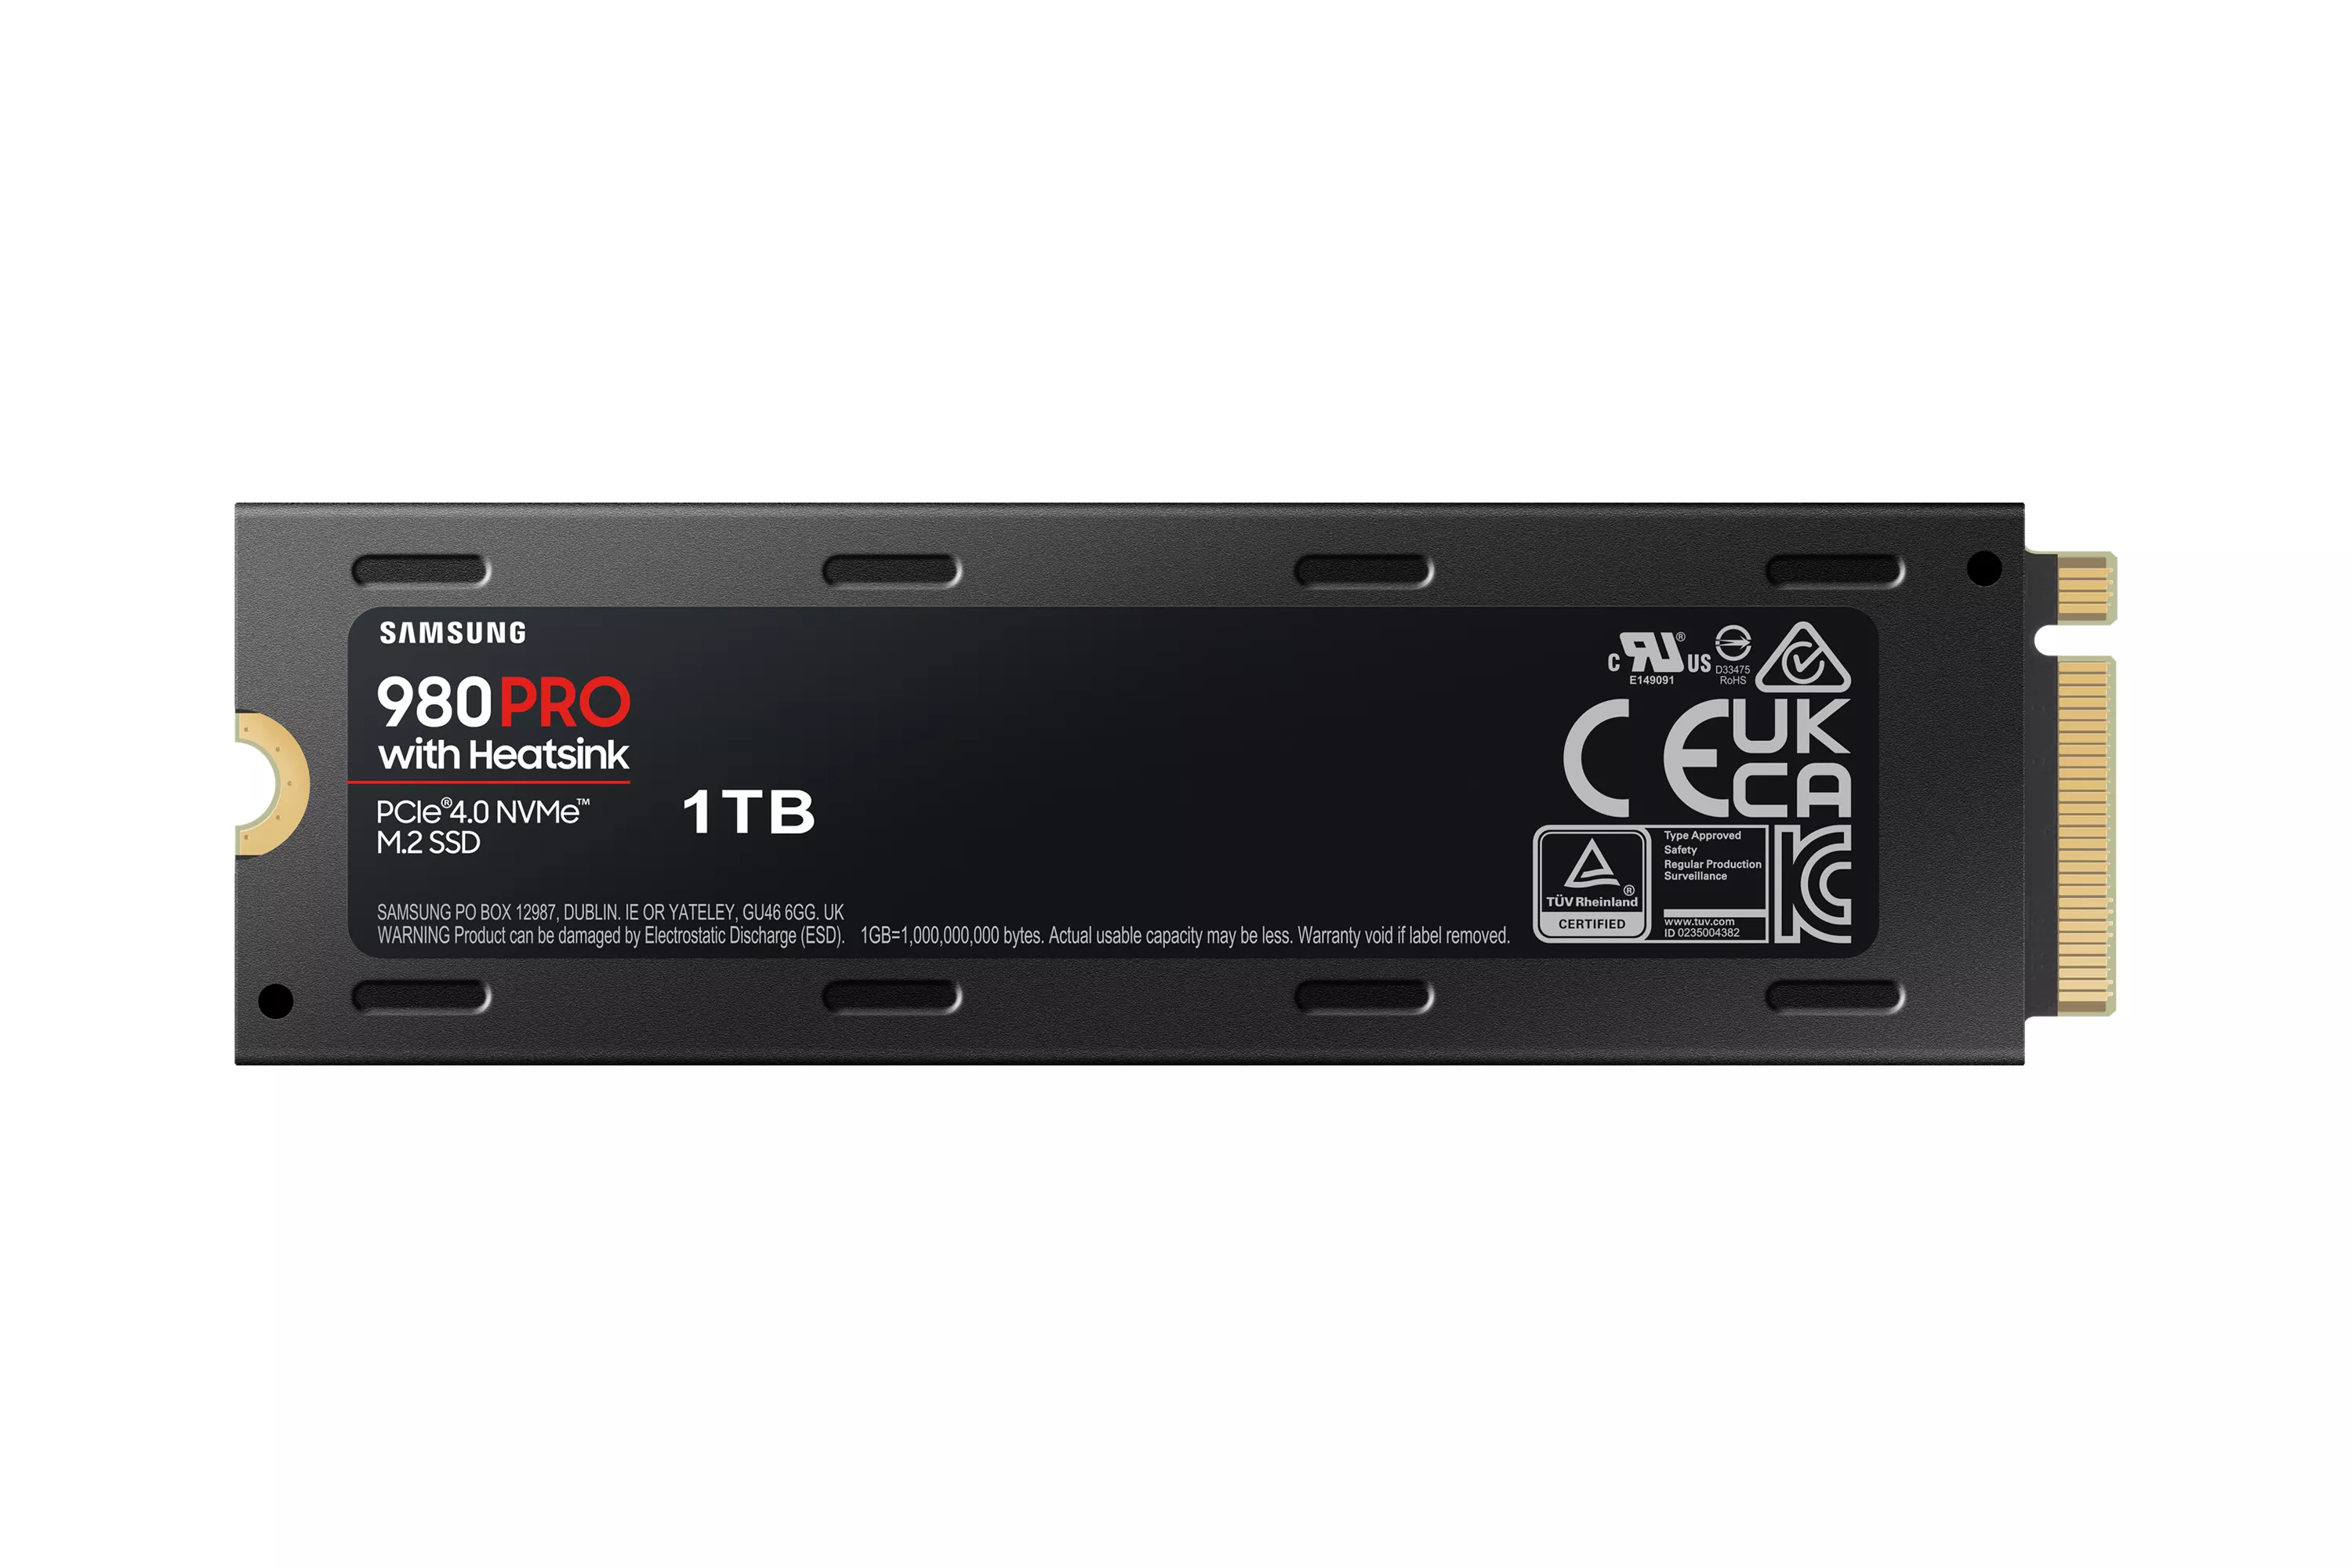 Vente SAMSUNG SSD 980 PRO Heatsink 1To M.2 NVMe Samsung au meilleur prix - visuel 2